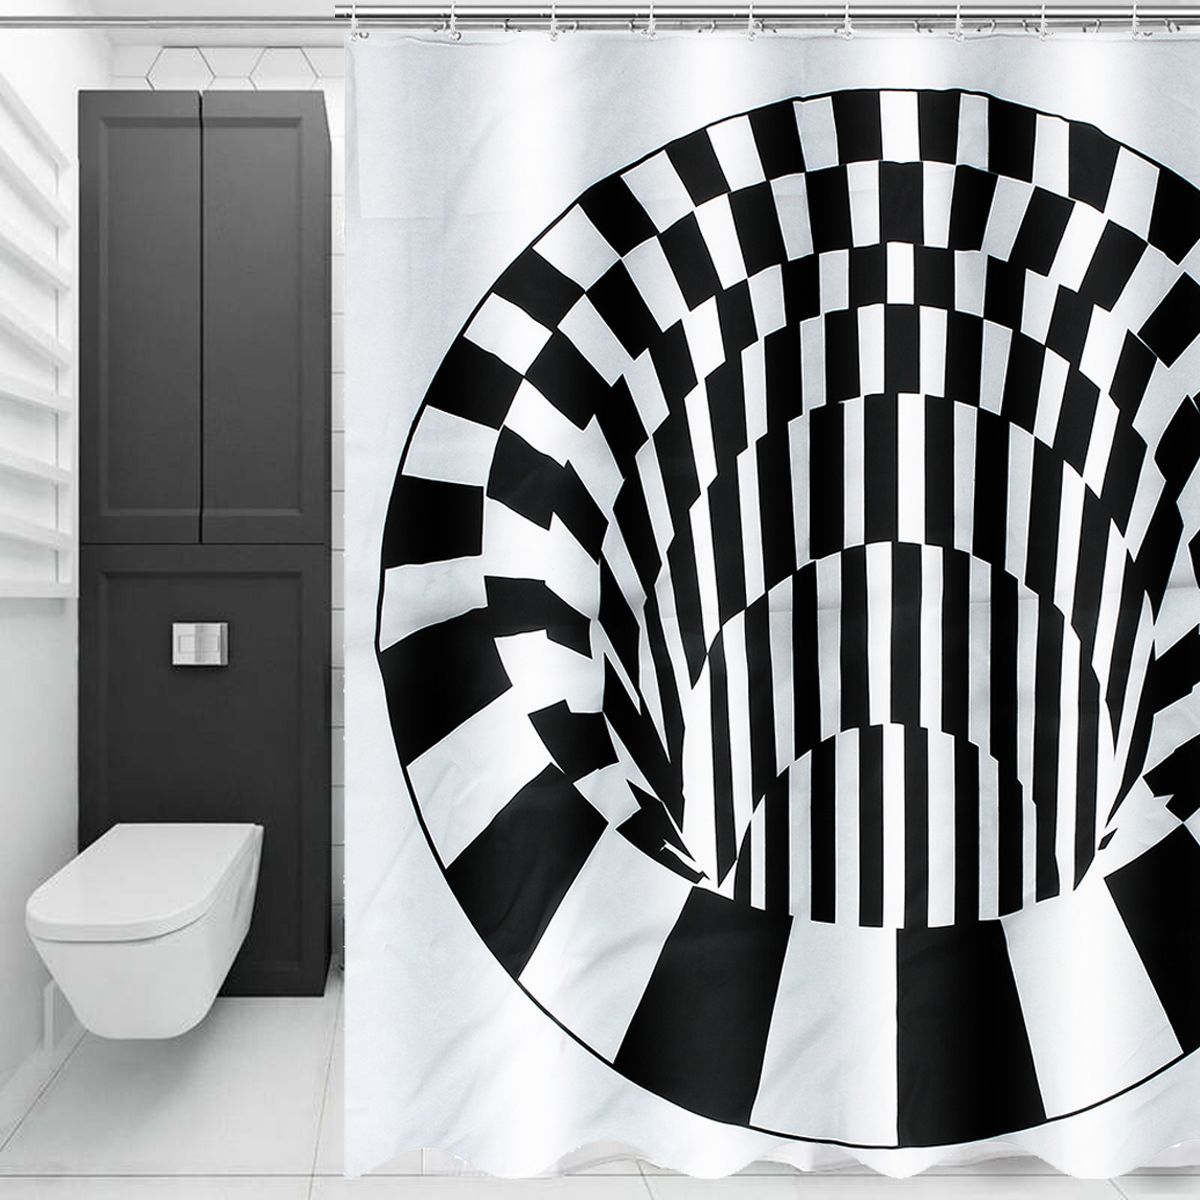 3D-Effect-Geometric-Square-Bathroom-Bath-Shower-Curtain-180180cm-w-12-1530246